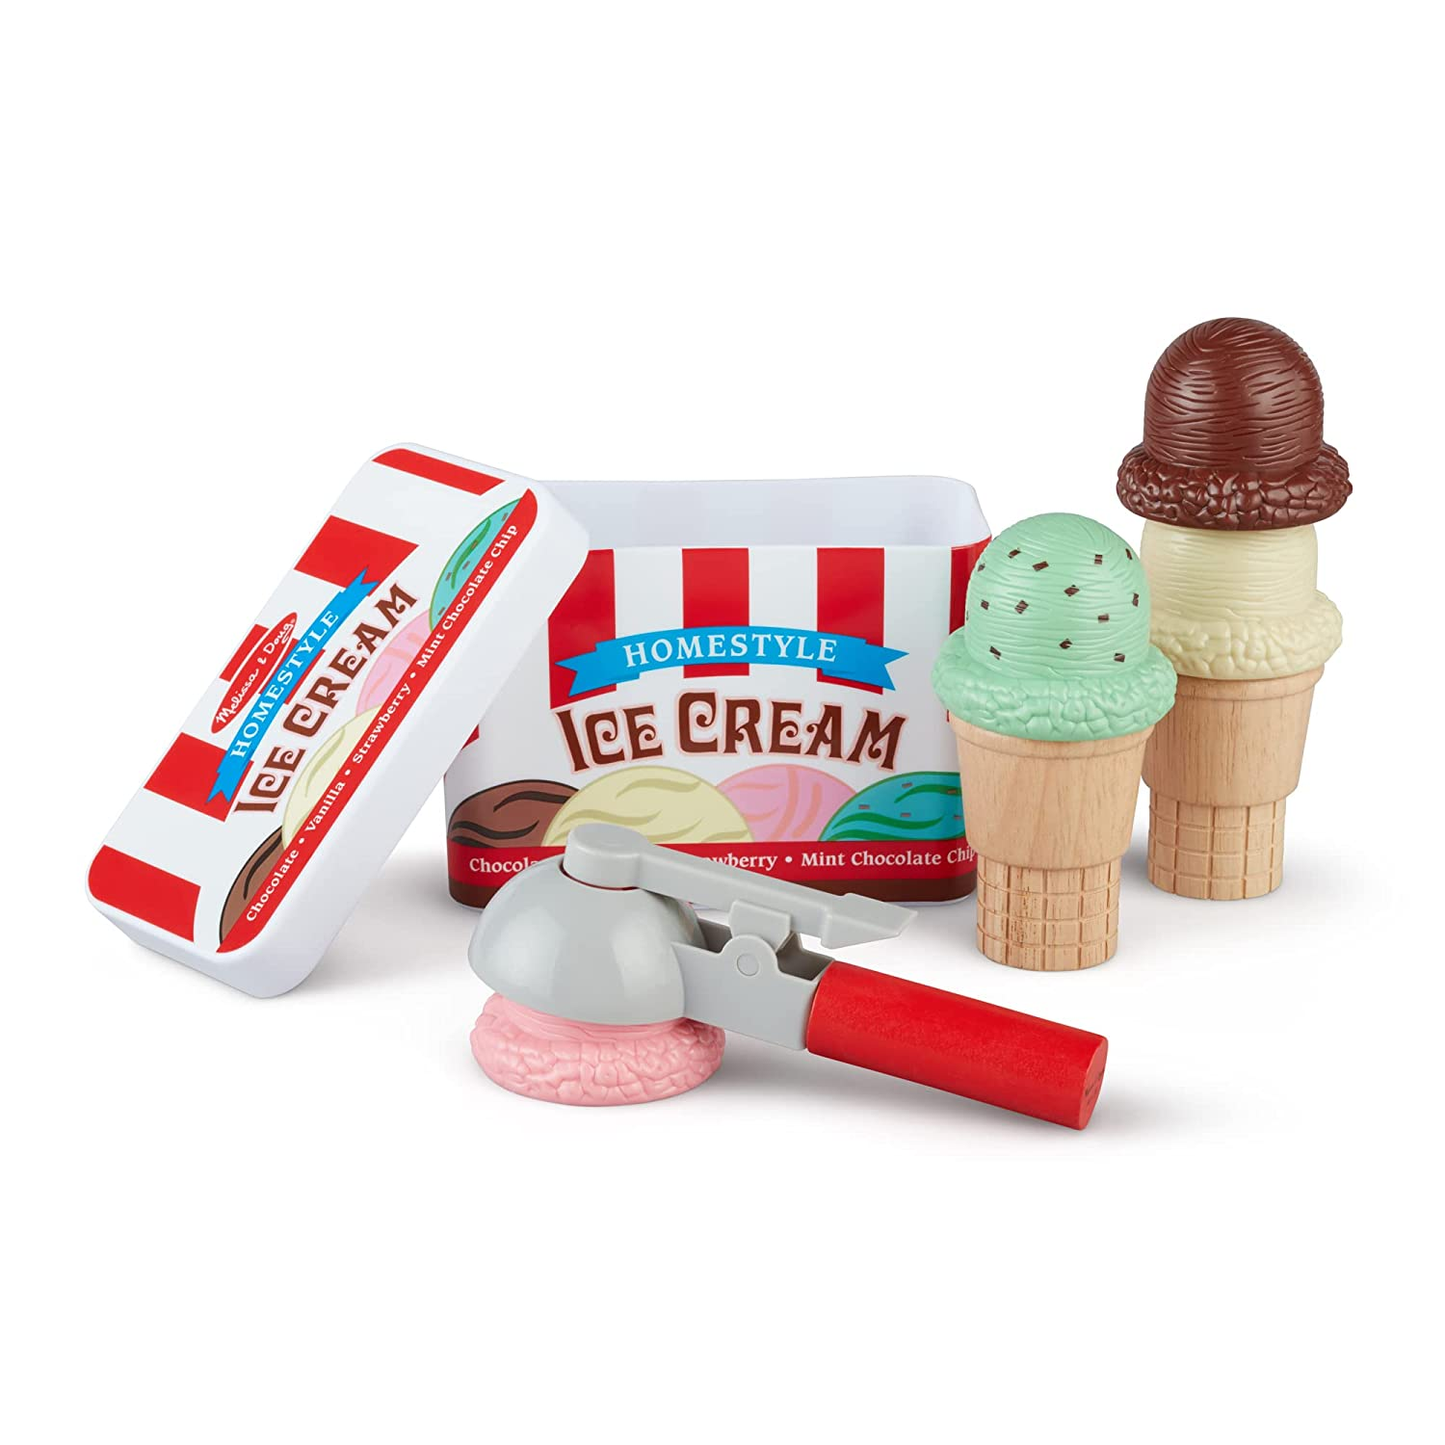 Scoop & Stack Ice Cream Cone Play Set